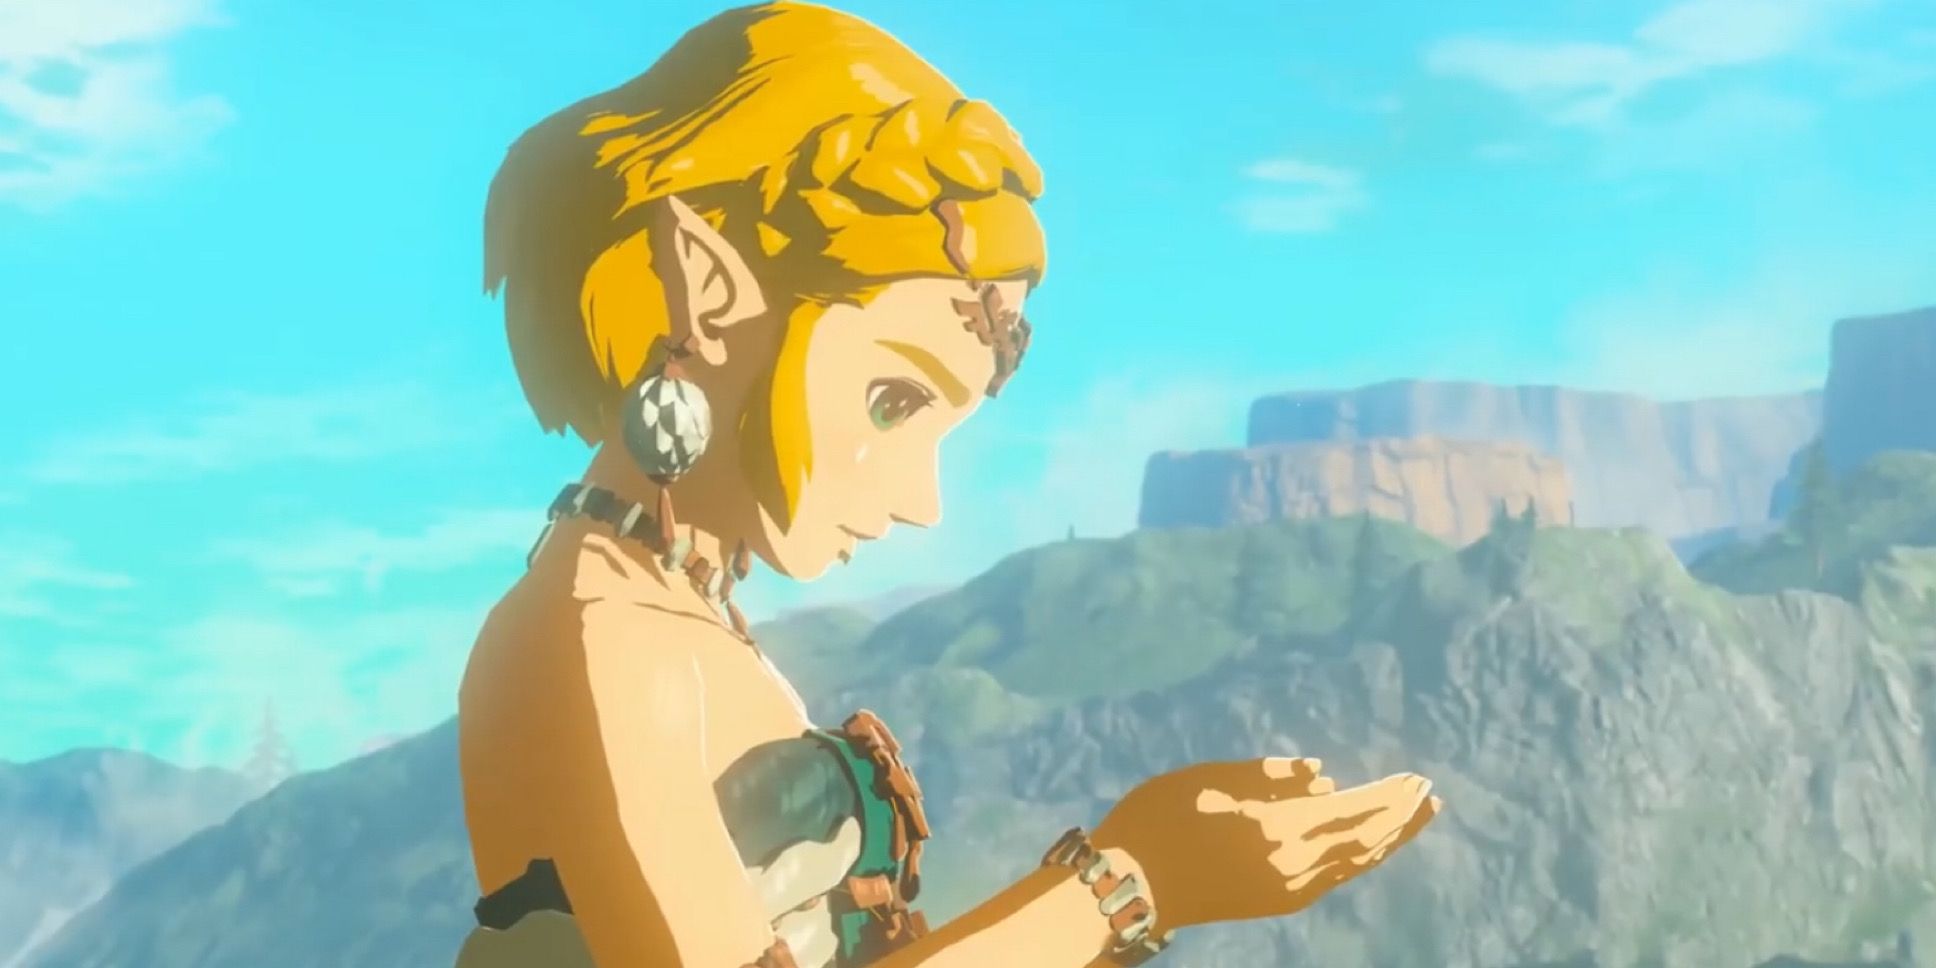 Princess Zelda looks at a Tear item in Tears of the Kingdom’s final trailer